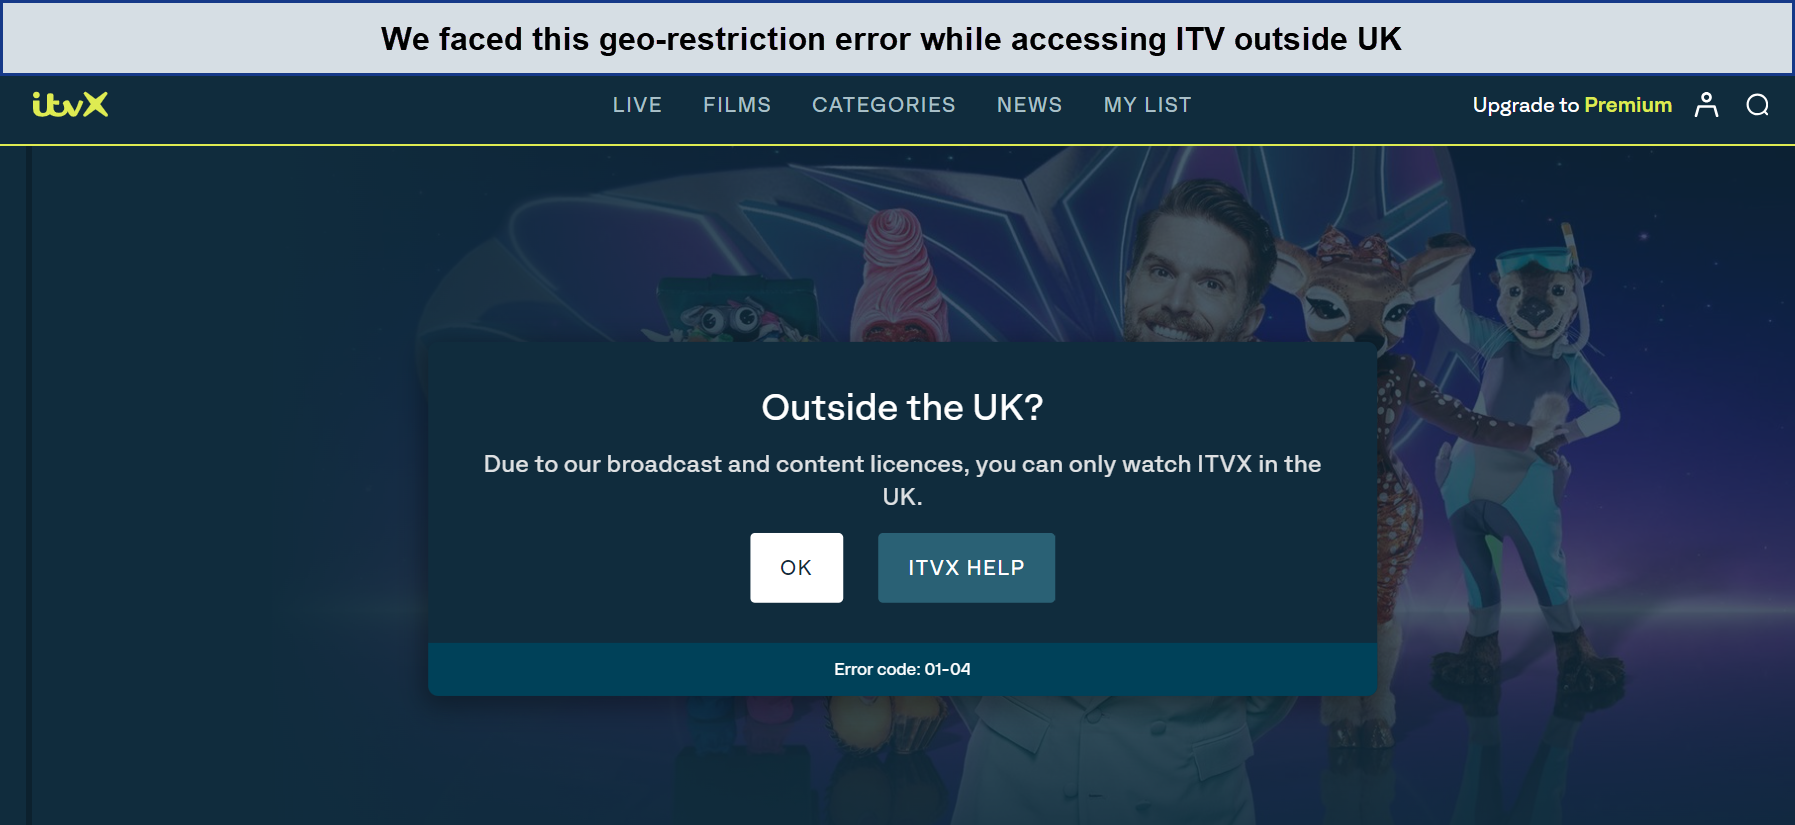 ITV-geo-restriction-error-in-UAE